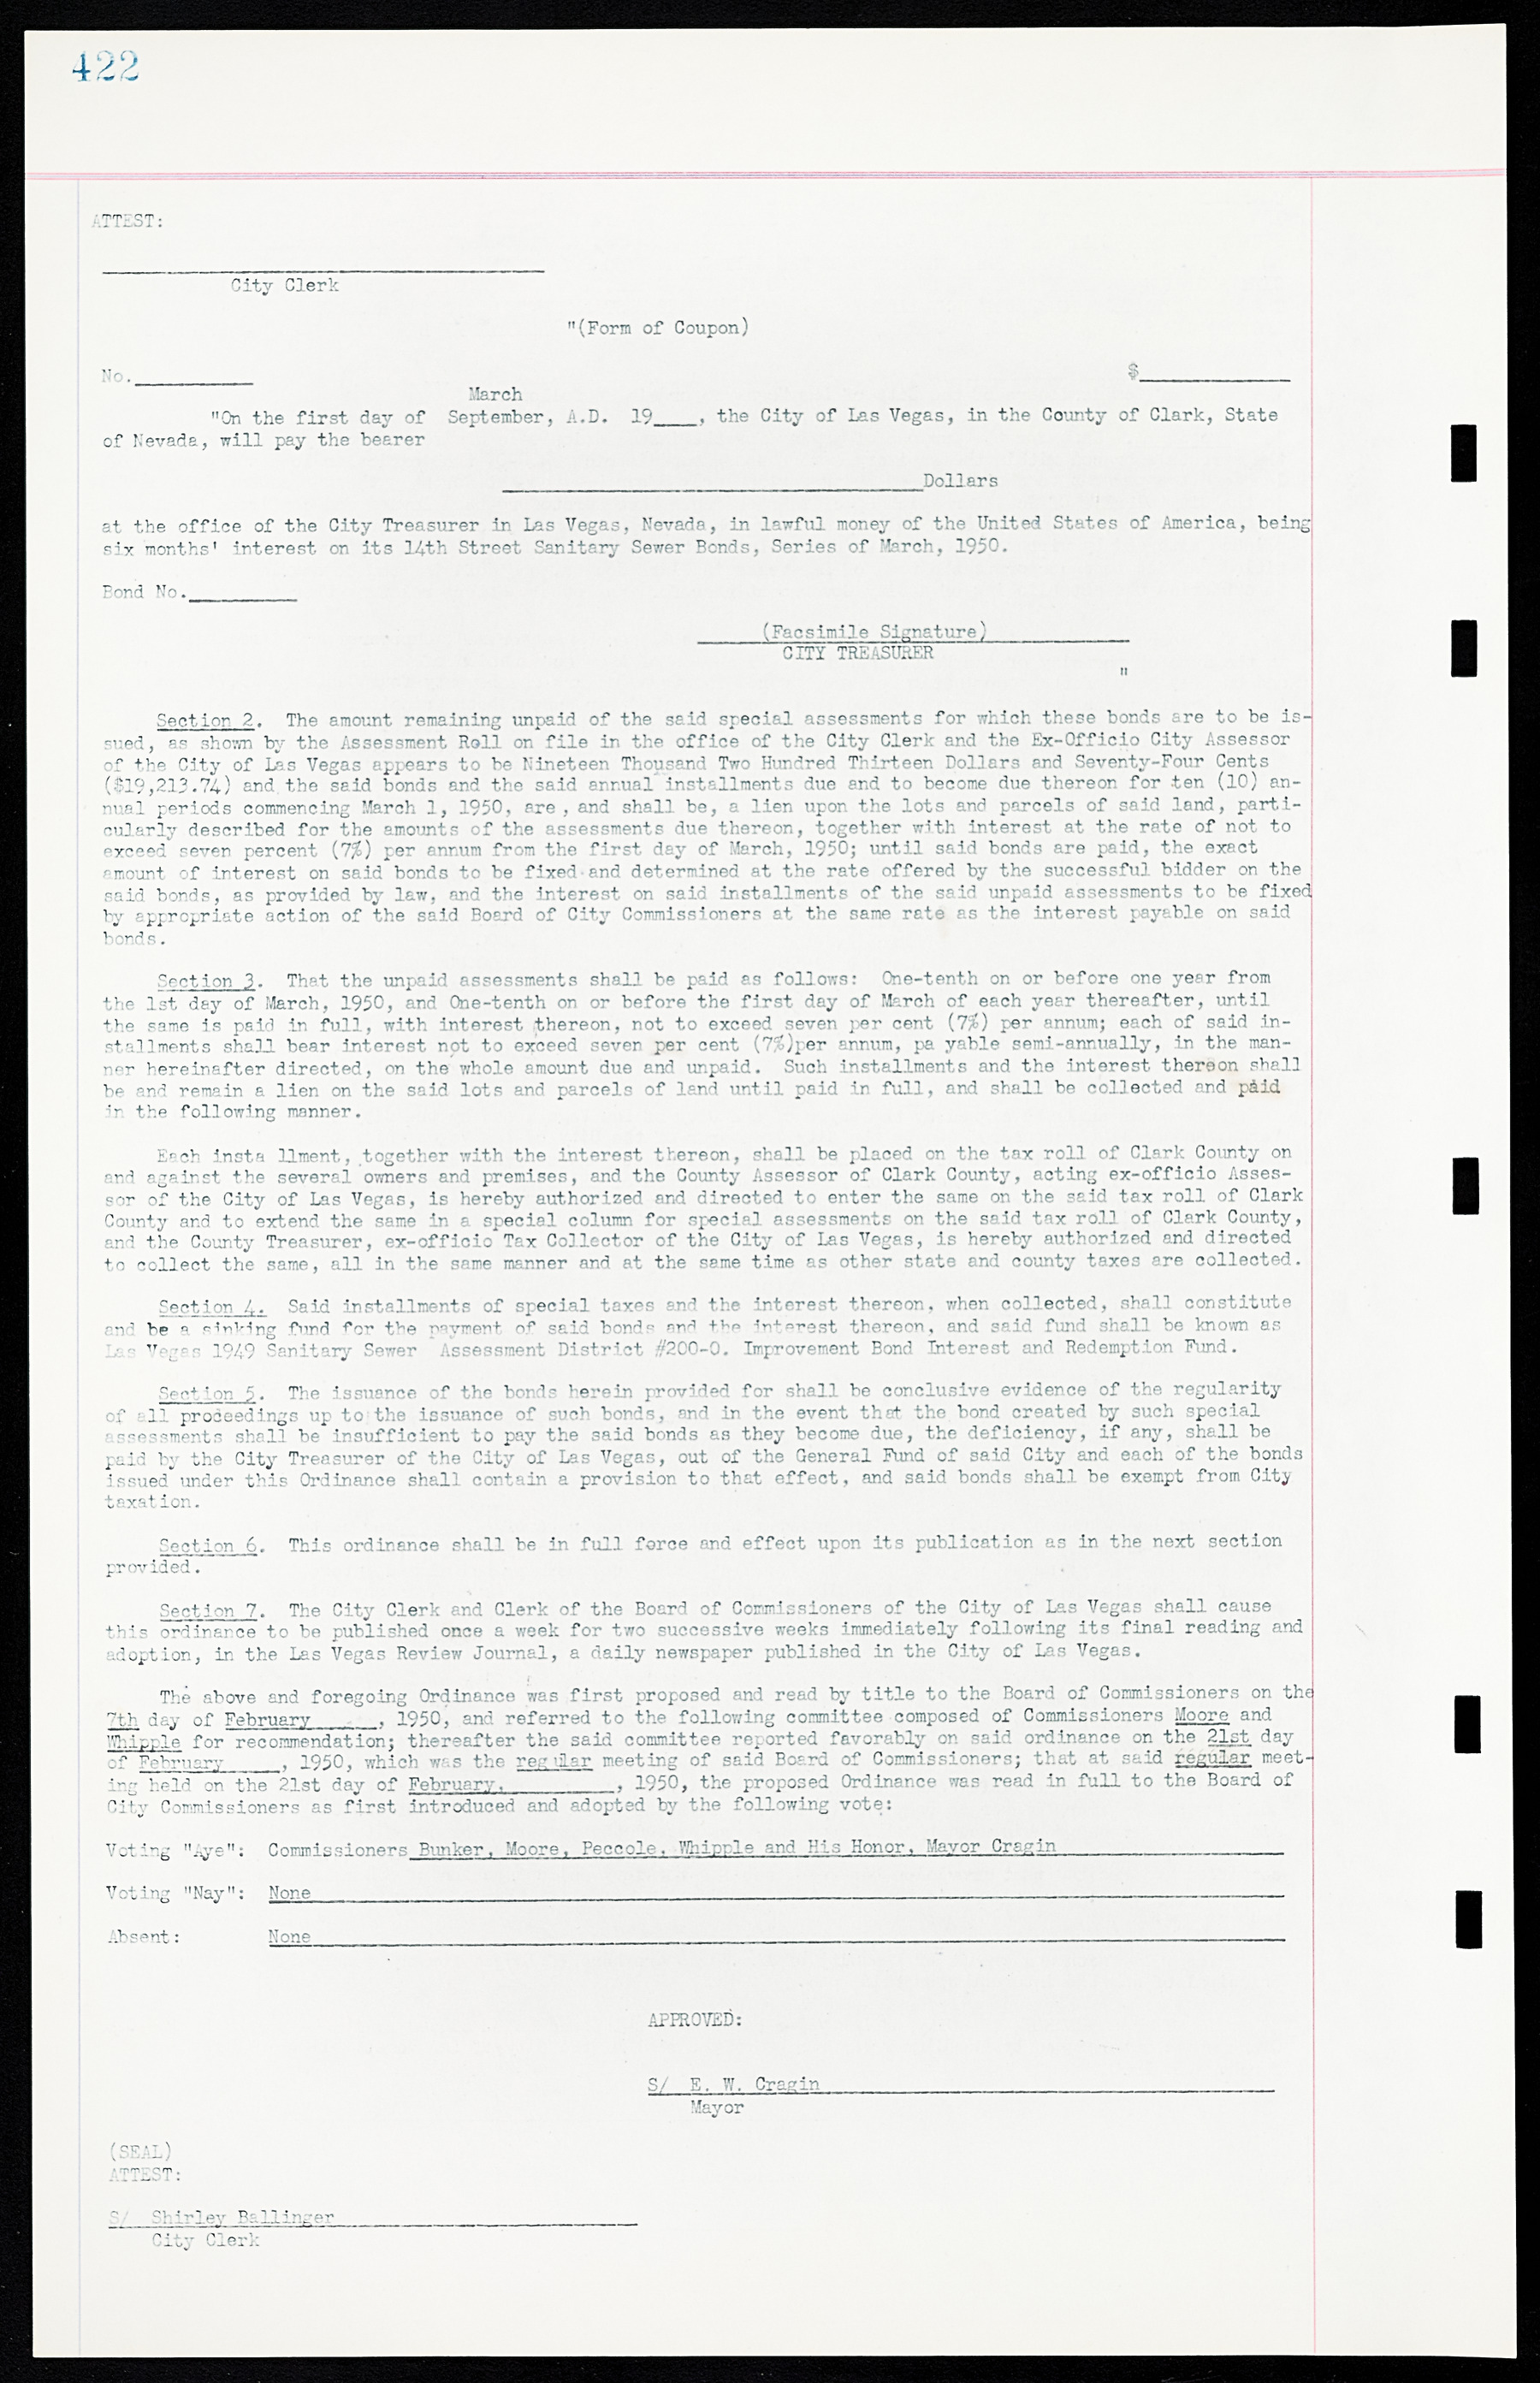 Las Vegas City Ordinances, March 31, 1933 to October 25, 1950, lvc000014-457